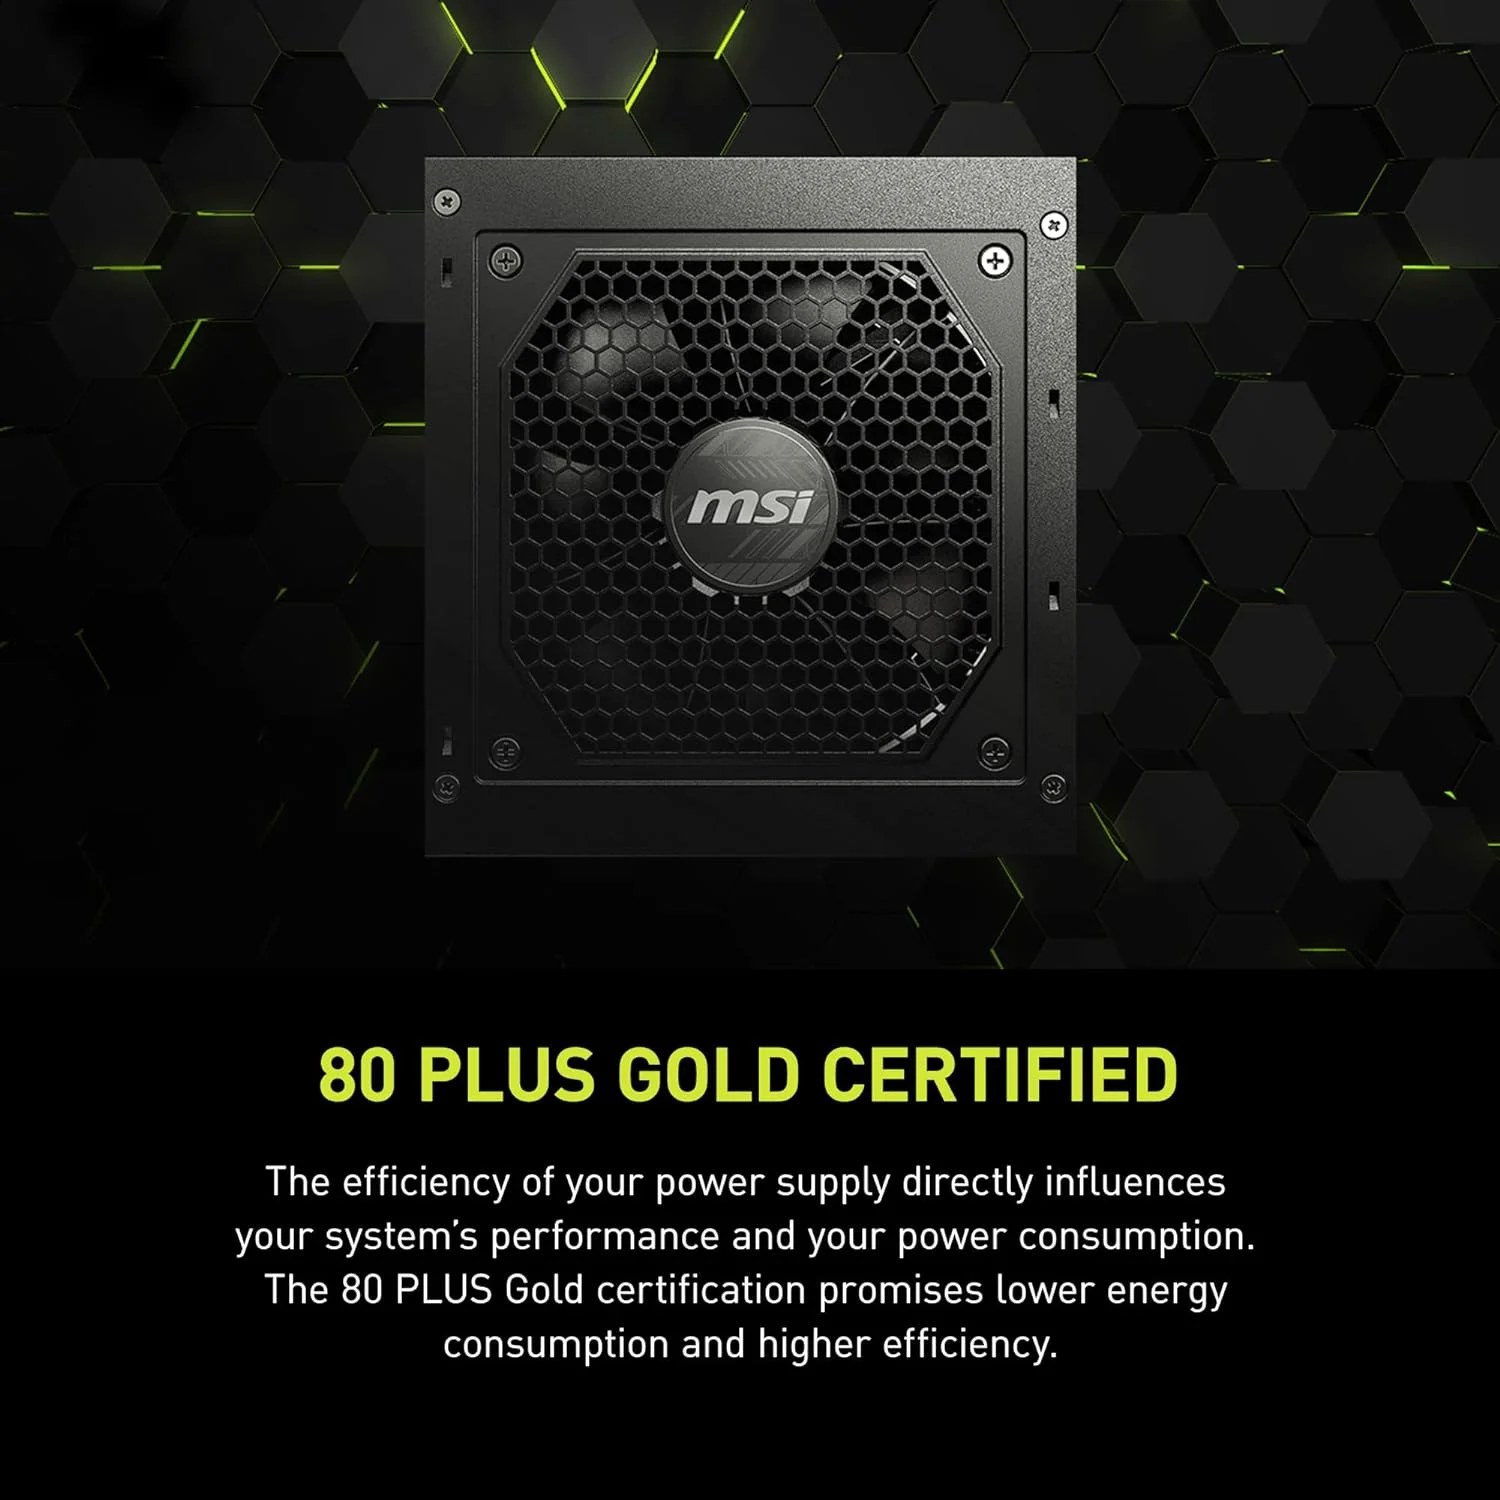 MSI-MAG-A750GL-PCIE-5-ATX-3.0-Gaming-Power-Supply